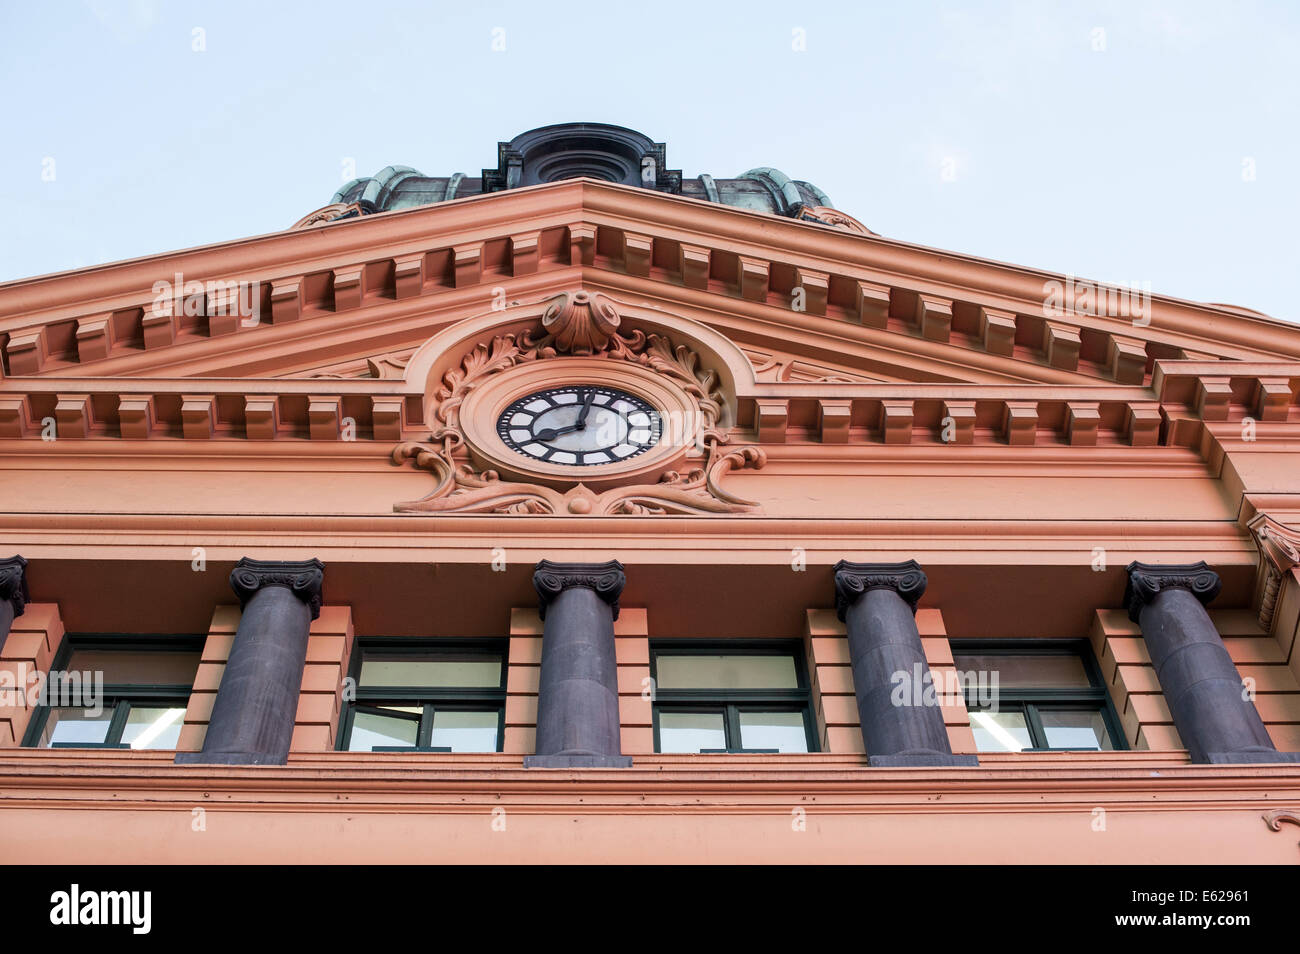 The impressive facade of Melbourne's Flinders Street Station. Stock Photo